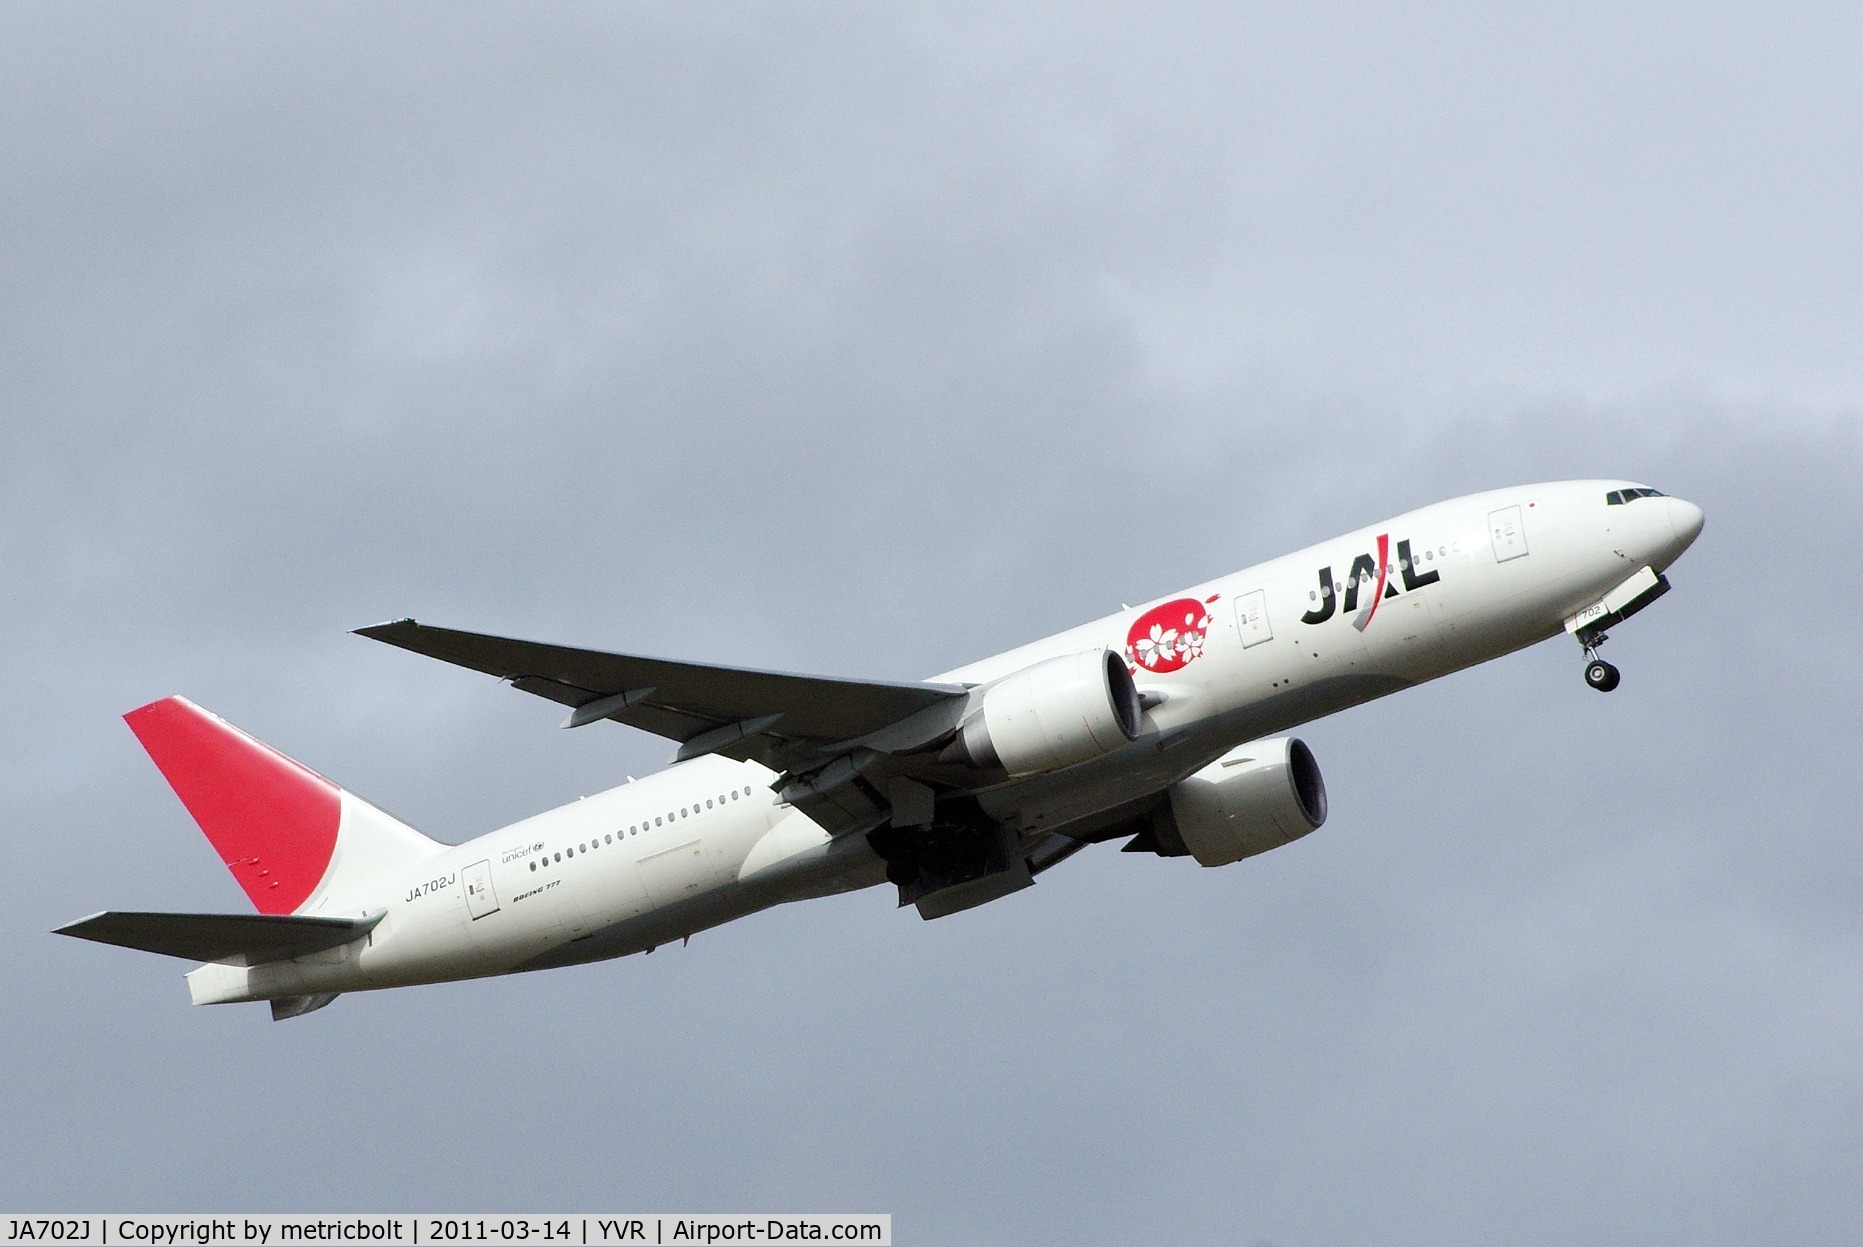 JA702J, 2002 Boeing 777-246/ER C/N 32890, Departure to Tokyo